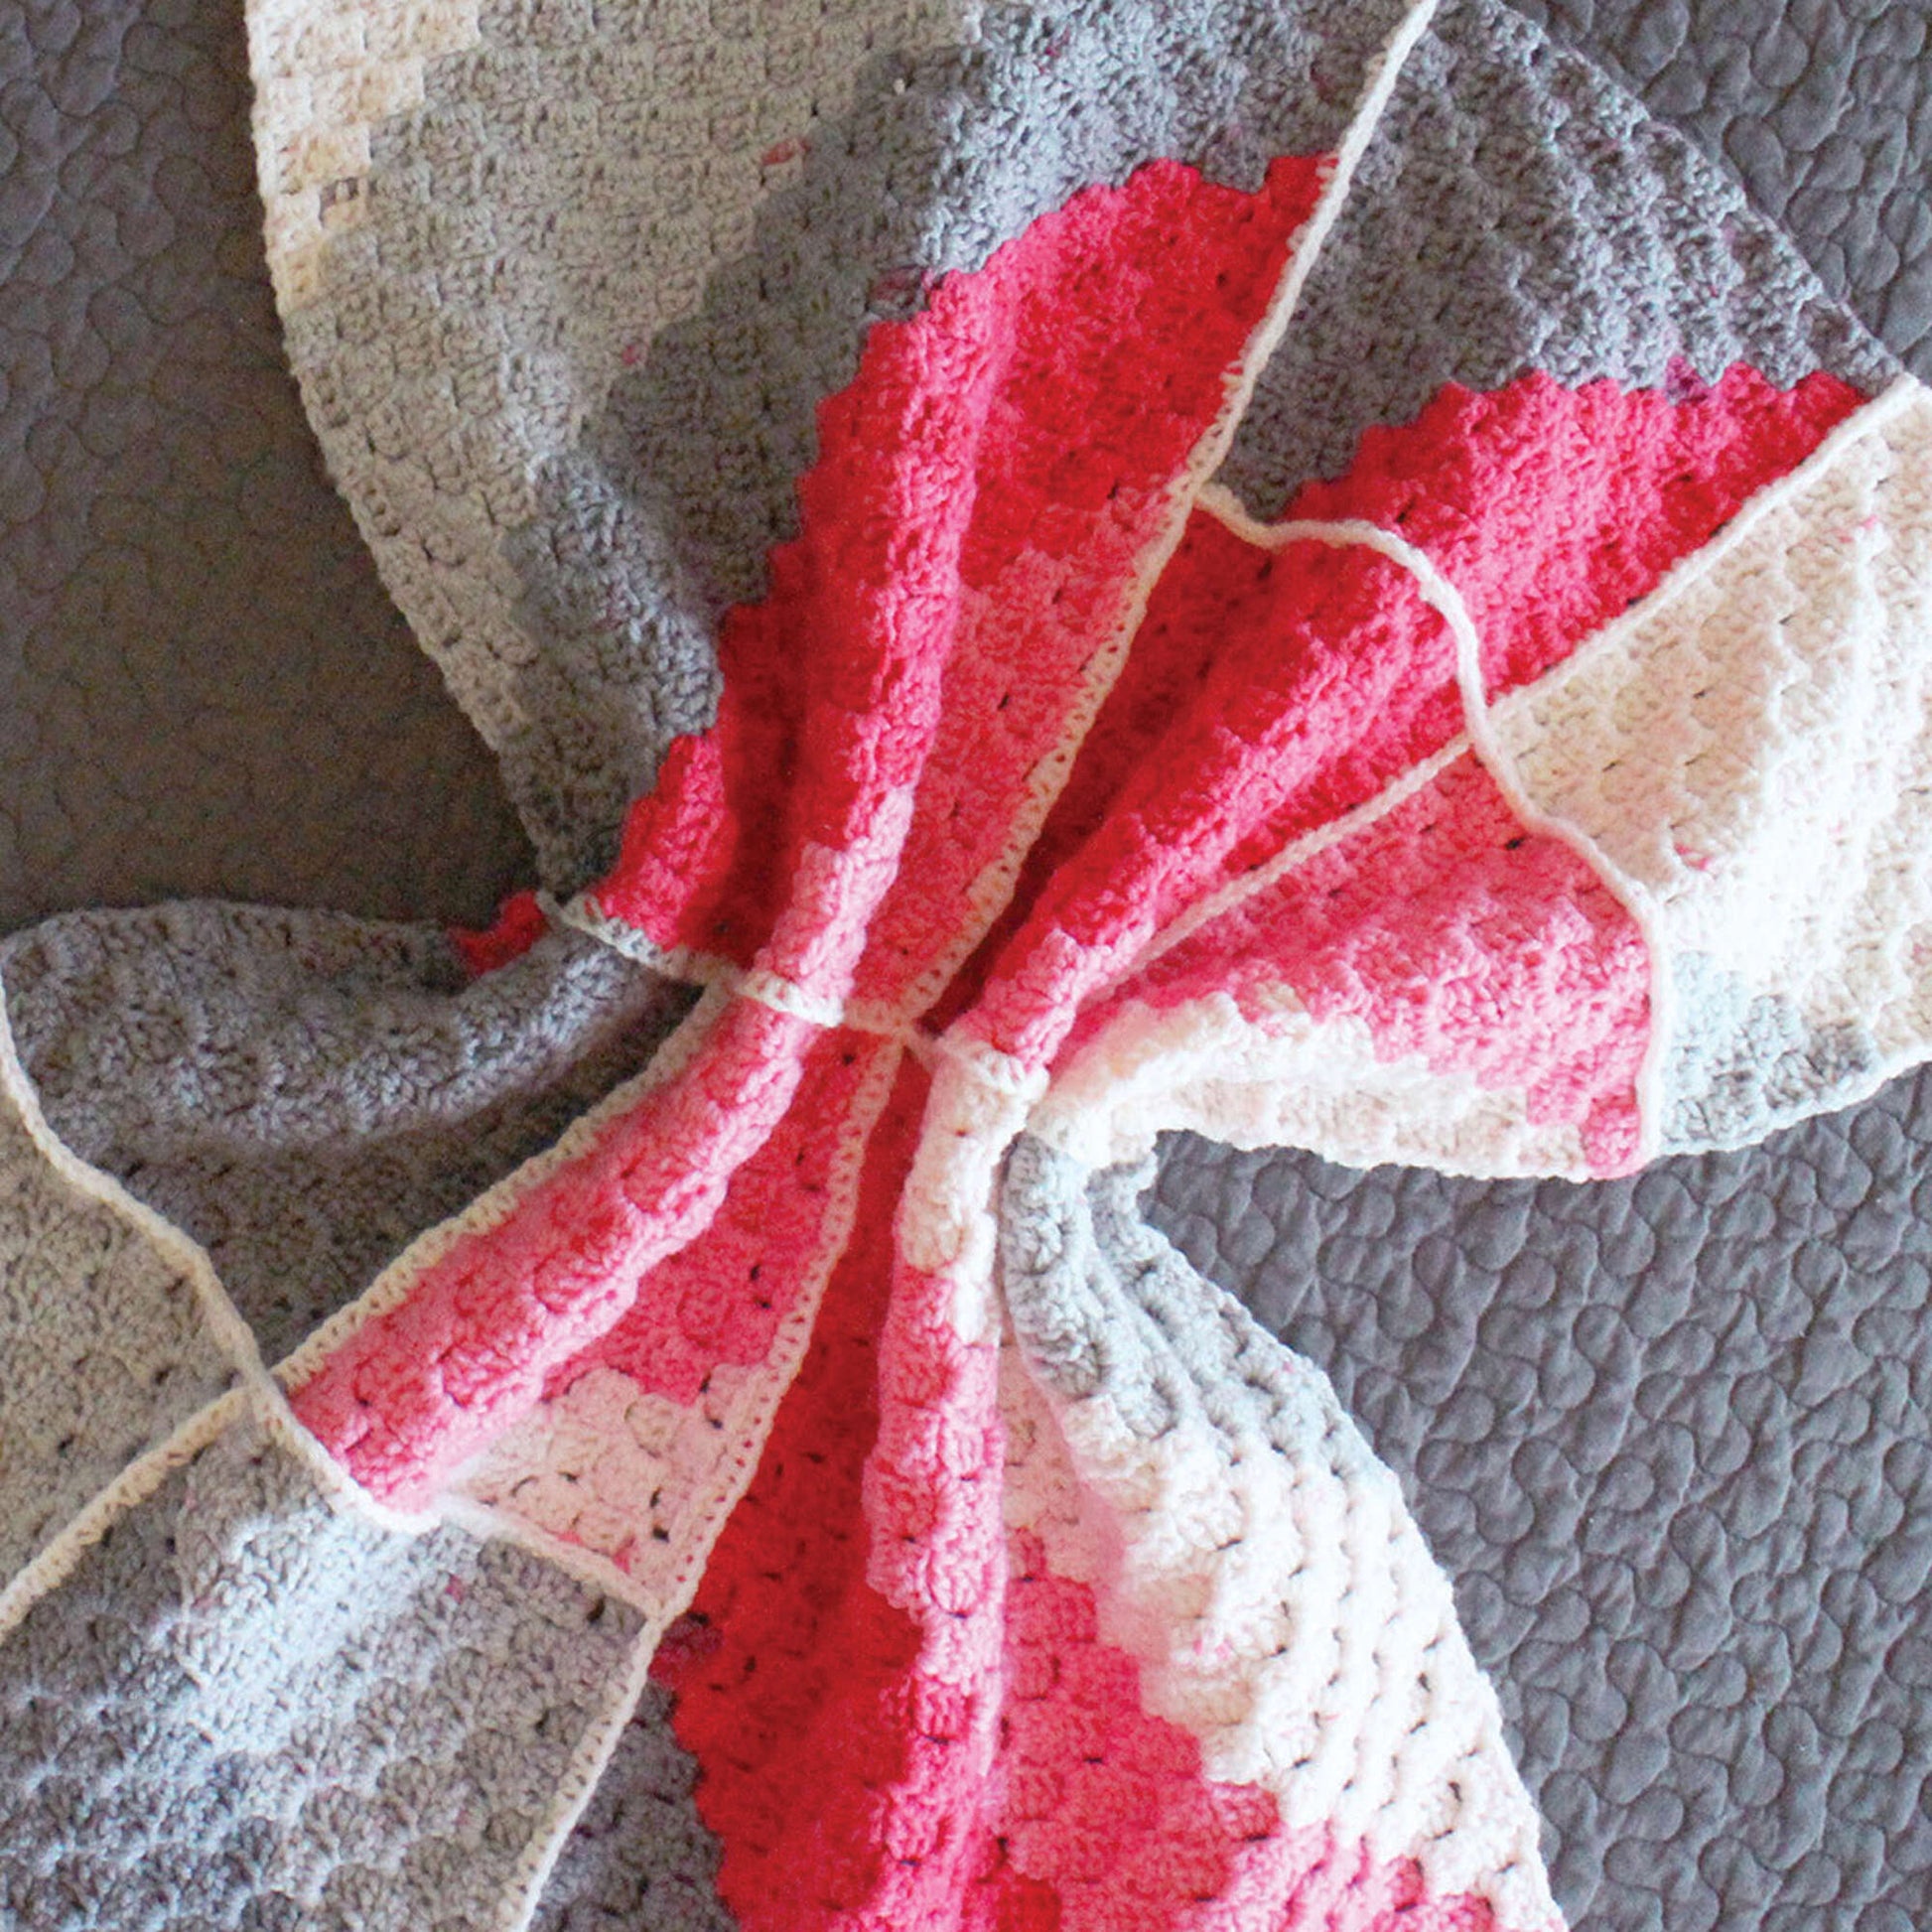 Bernat Geometric Crochet Baby Blanket Crochet Blanket made in Bernat Pop! yarn